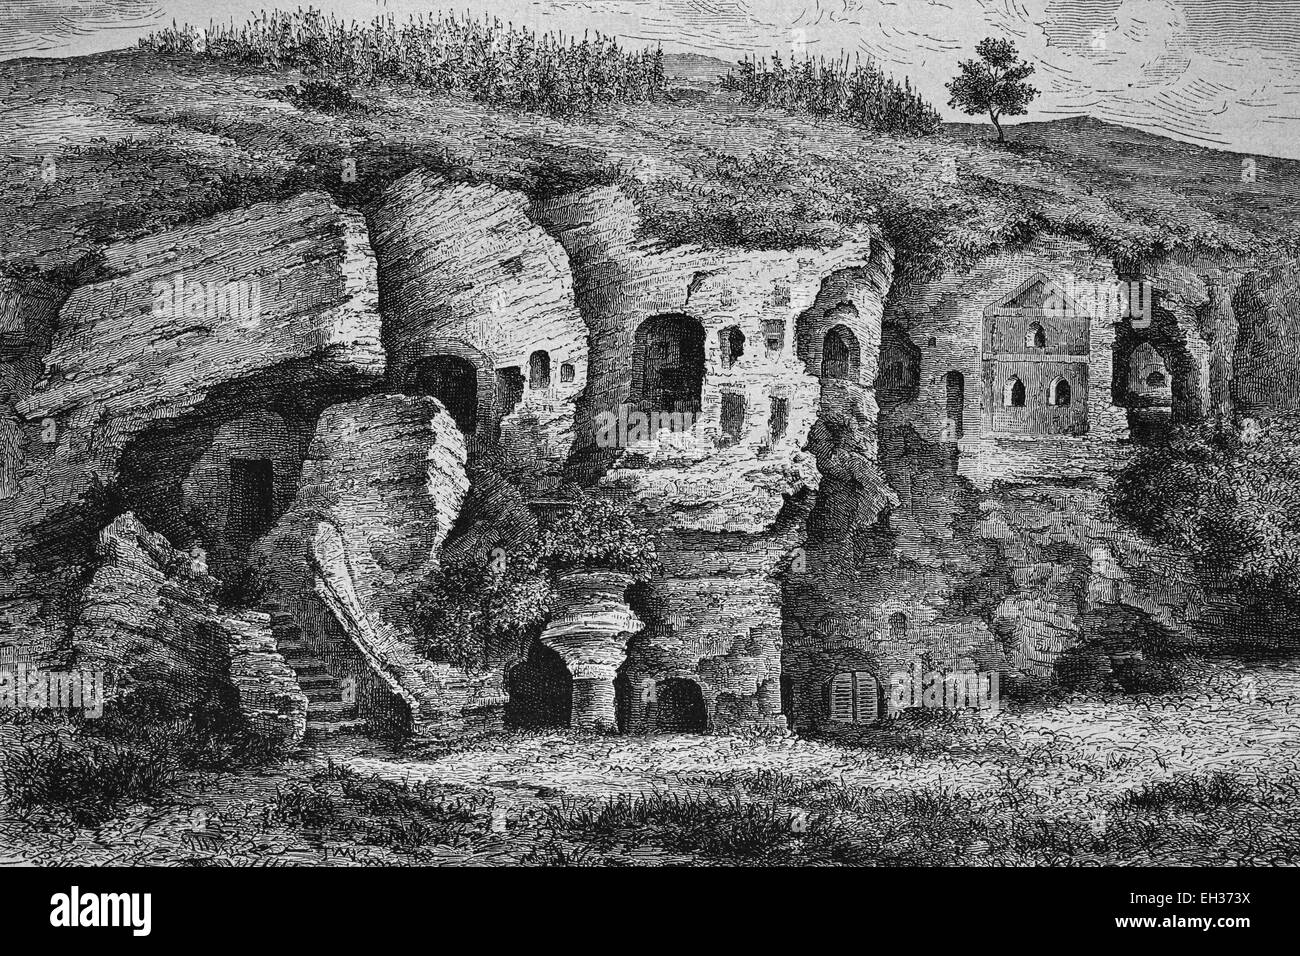 Heidenloecher grotte vicino Ueberlingen, Baden-Wuerttemberg, Germania, incisione su legno, 1880, EUROPA Foto Stock